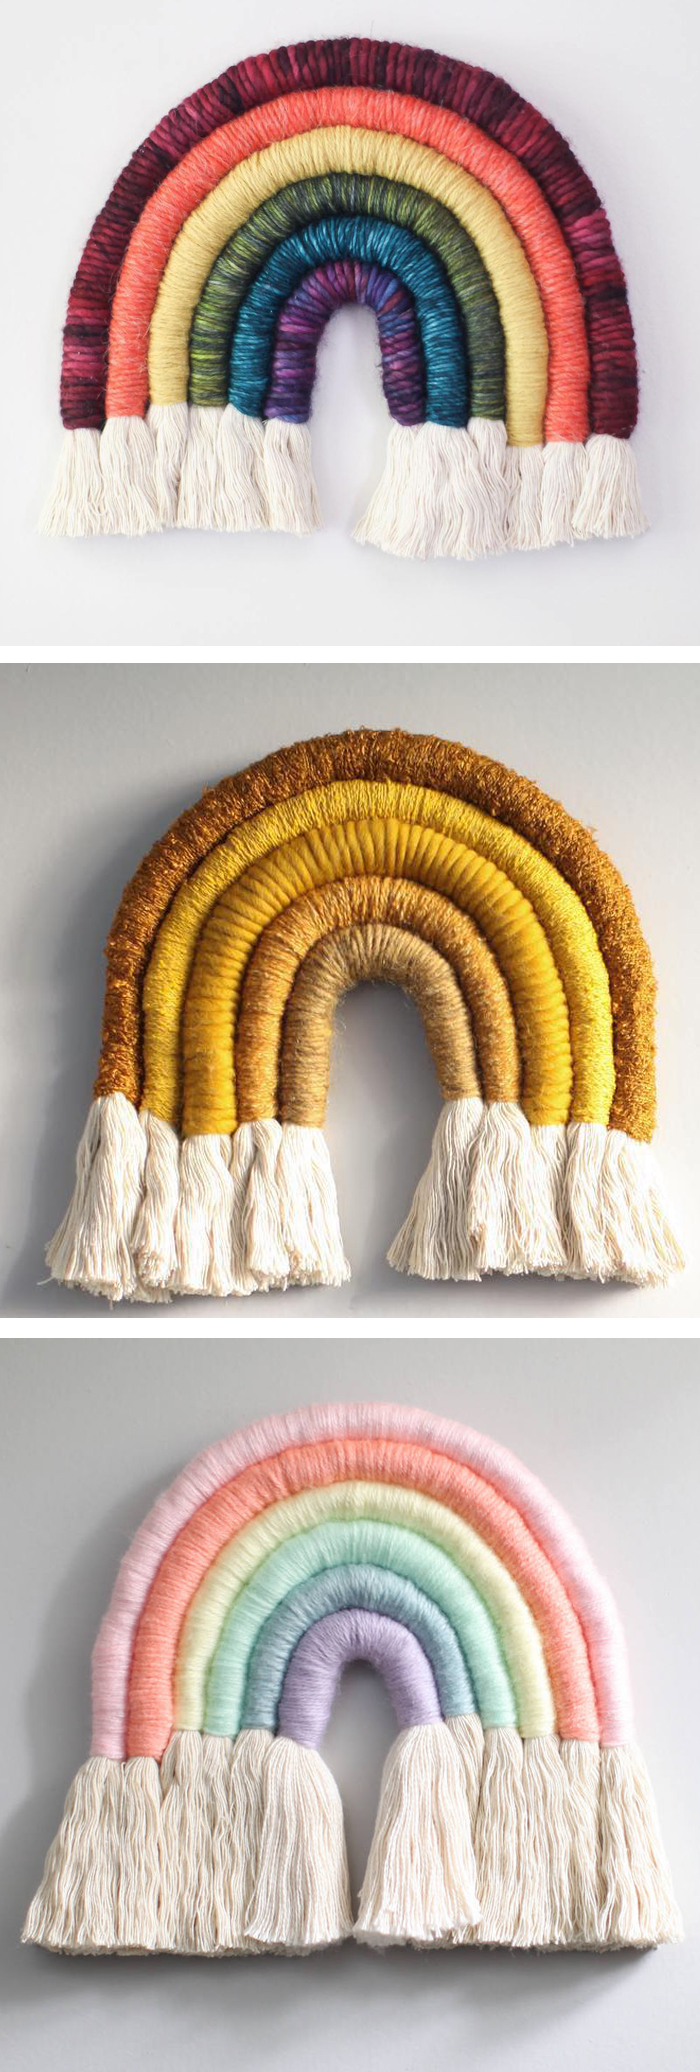 Rainbow weaving fiber art by Mandi Smethells